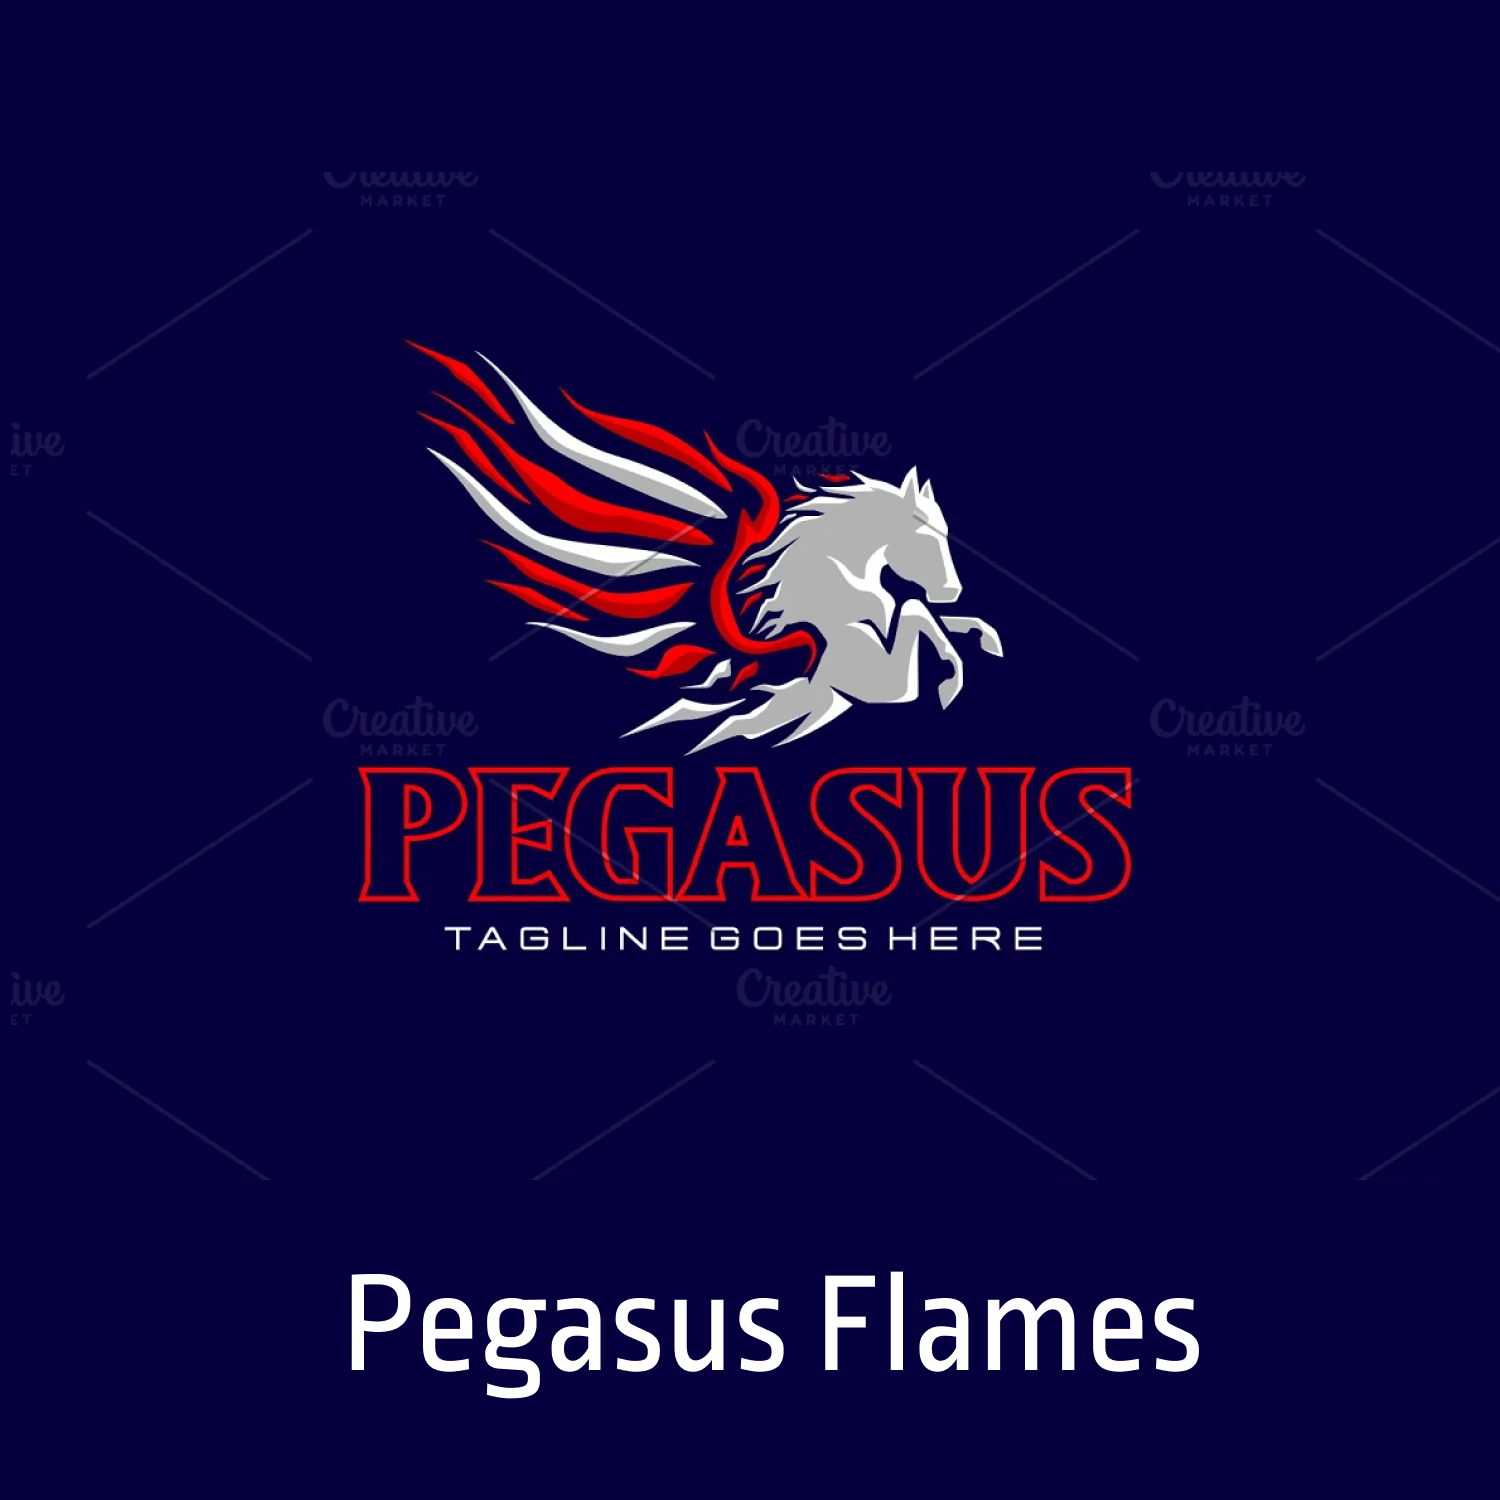 Pegasus mono color logo company name.